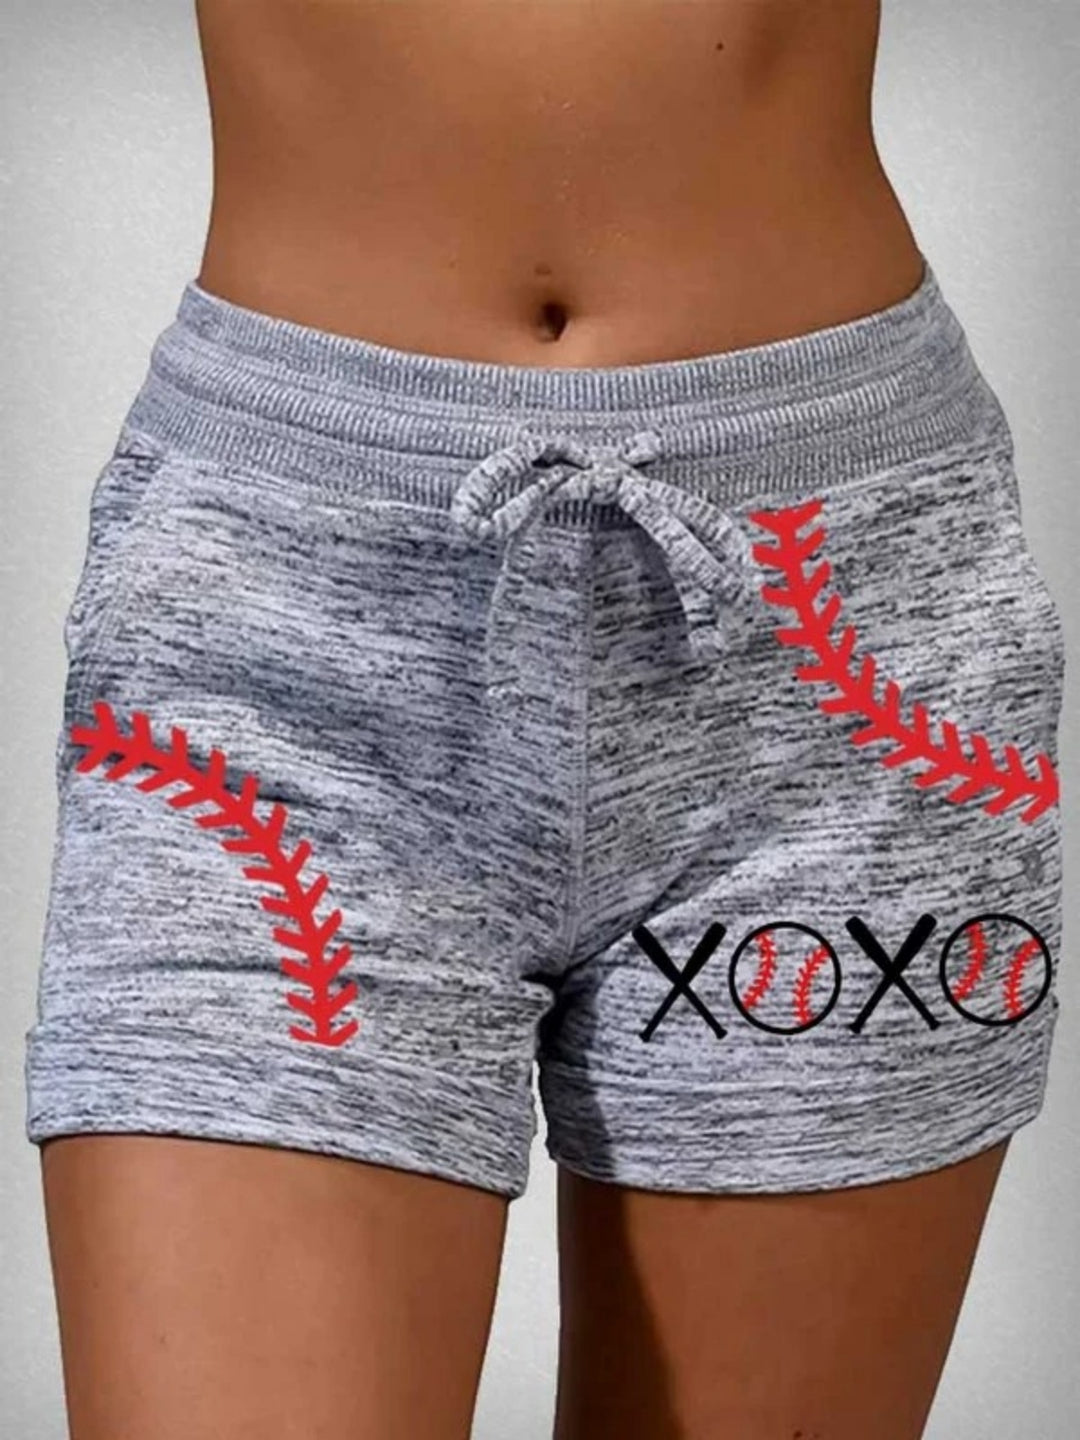 XOXO Baseball Print Sweatpants